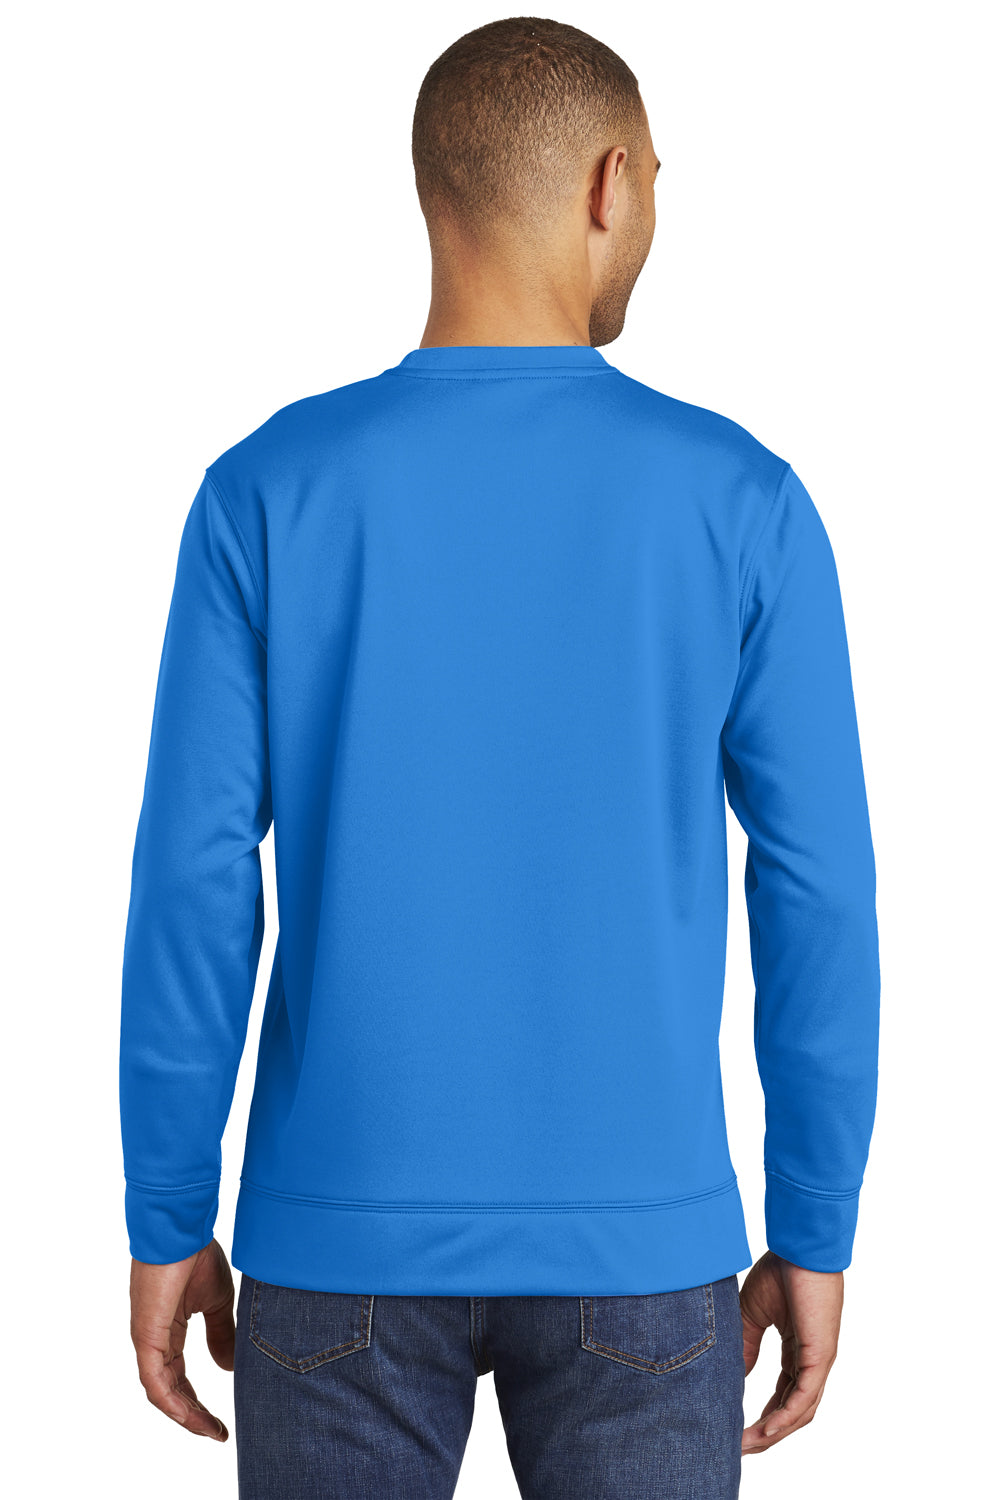 Port & Company PC590 Mens Dry Zone Performance Moisture Wicking Fleece Crewneck Sweatshirt Royal Blue Back